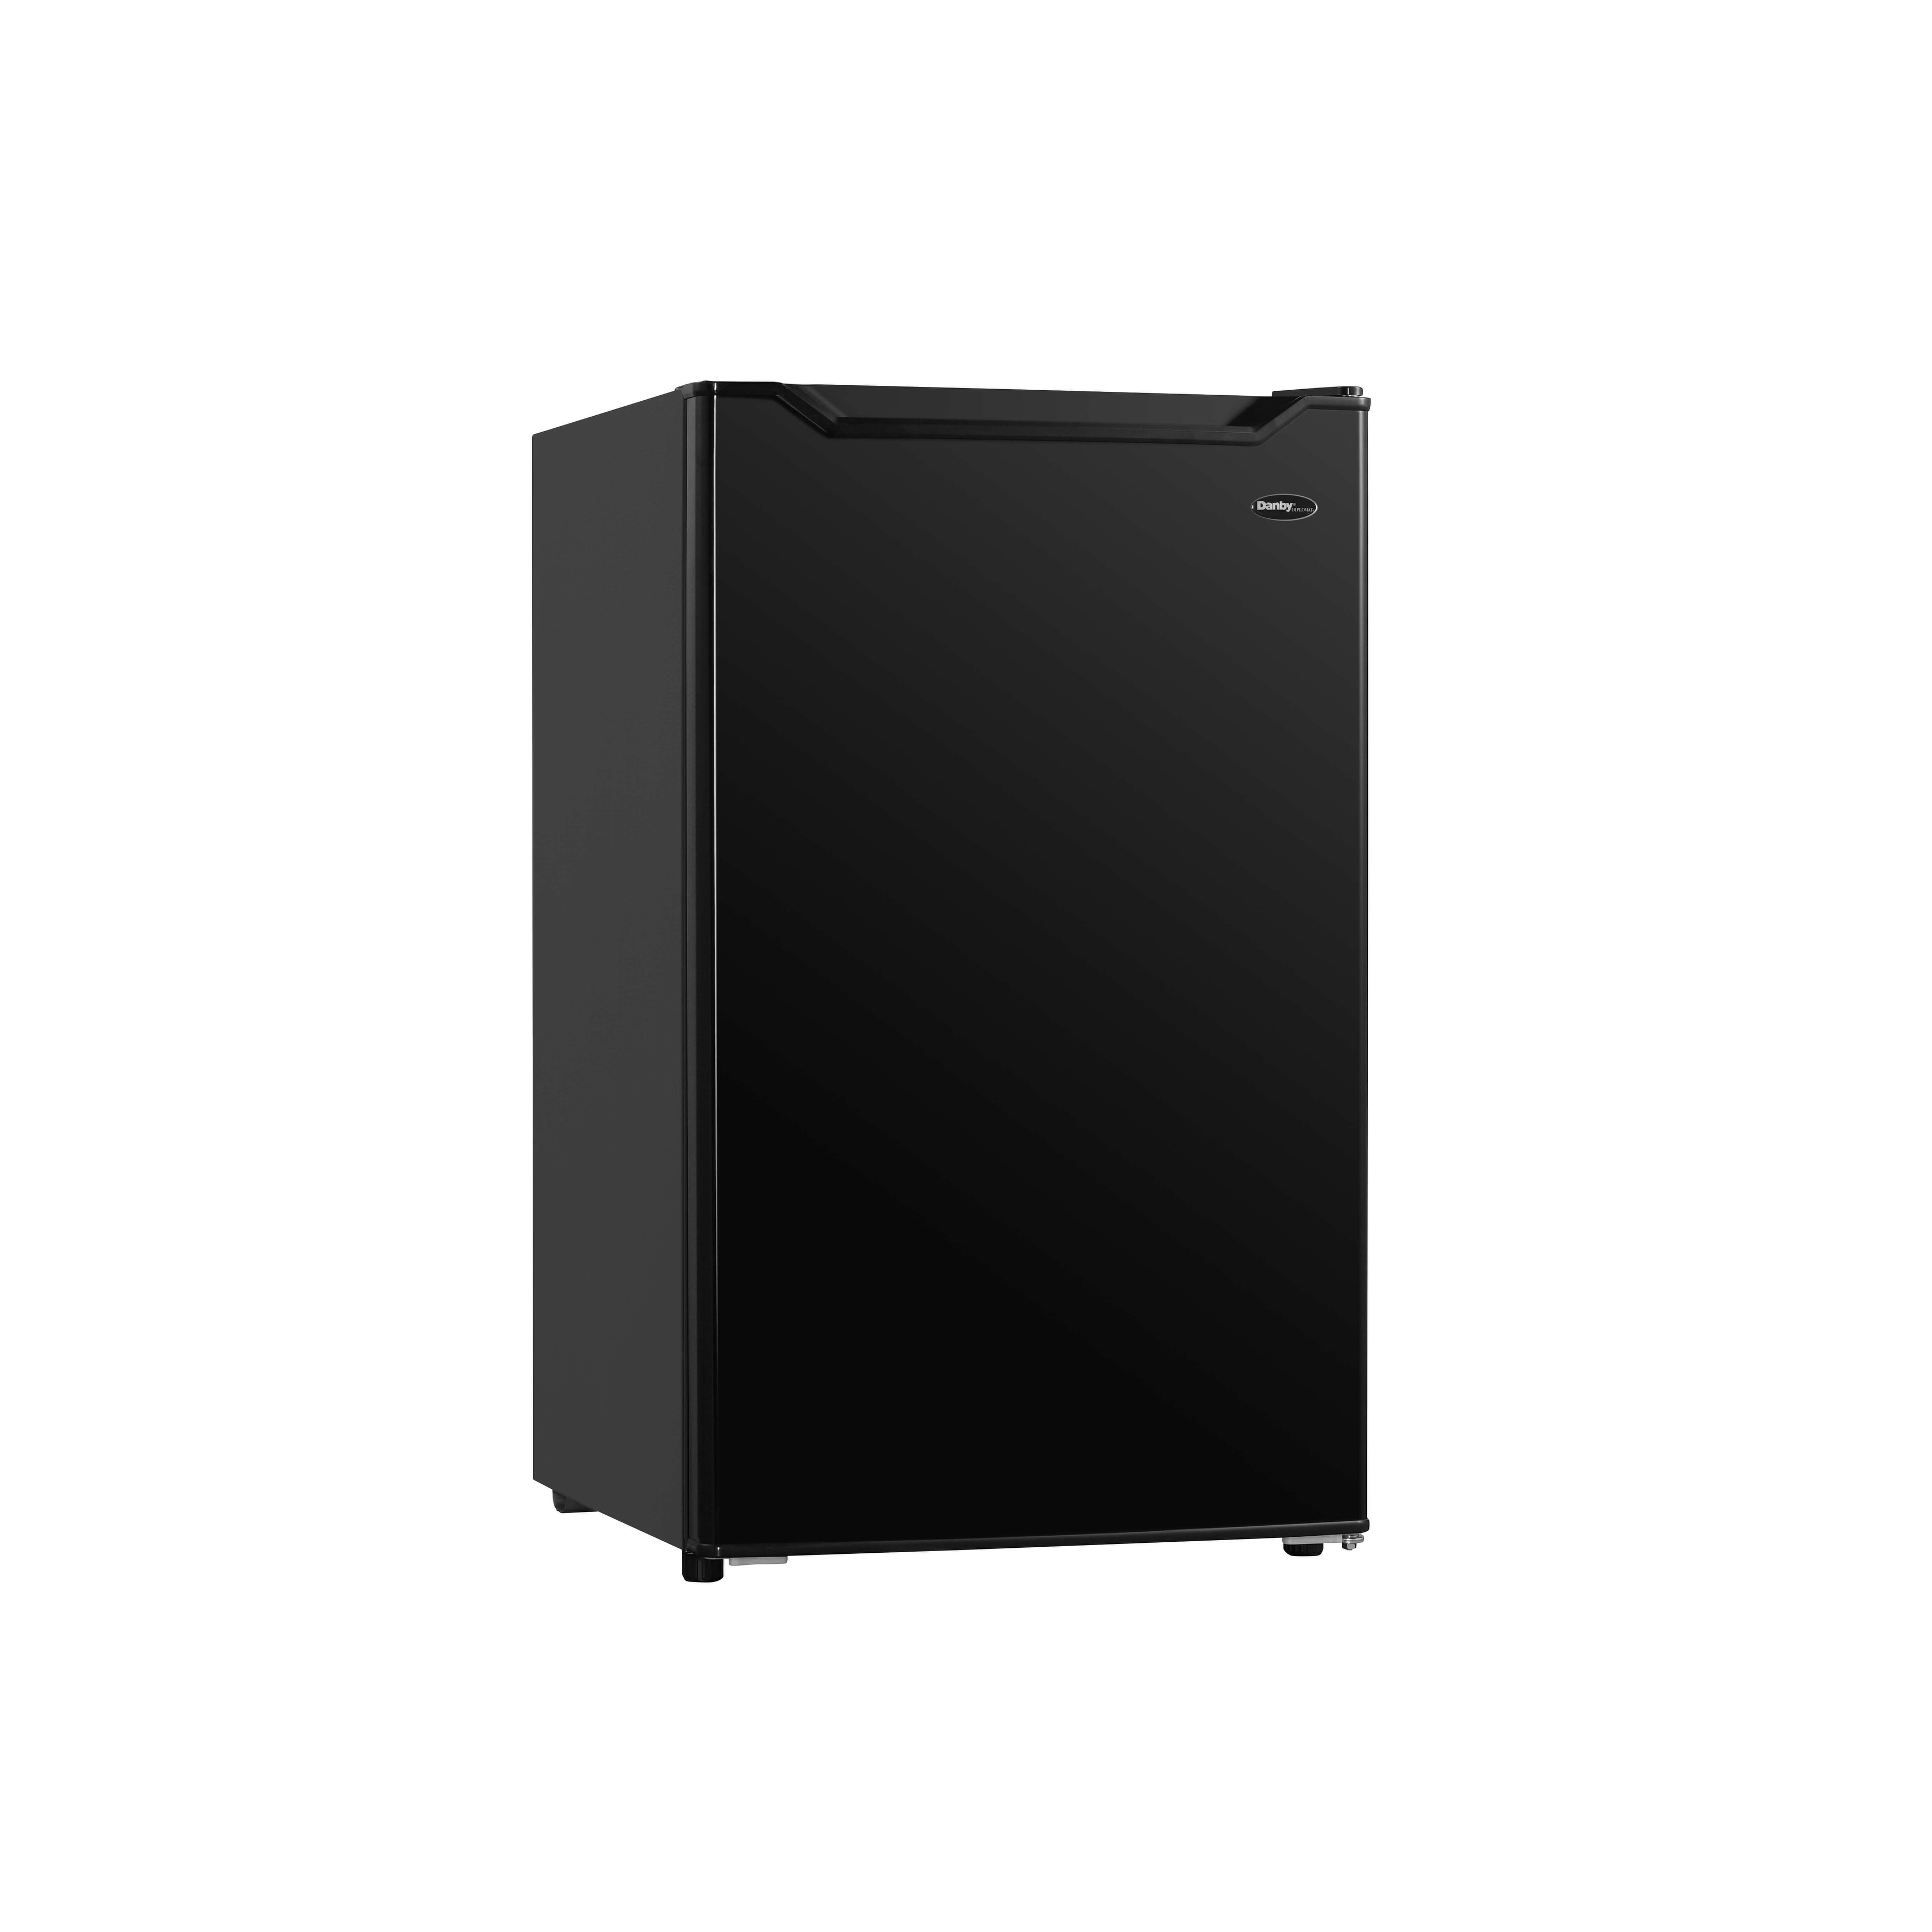 Danby 3.2 cu. ft. Compact Refrigerator DAR032B1BM